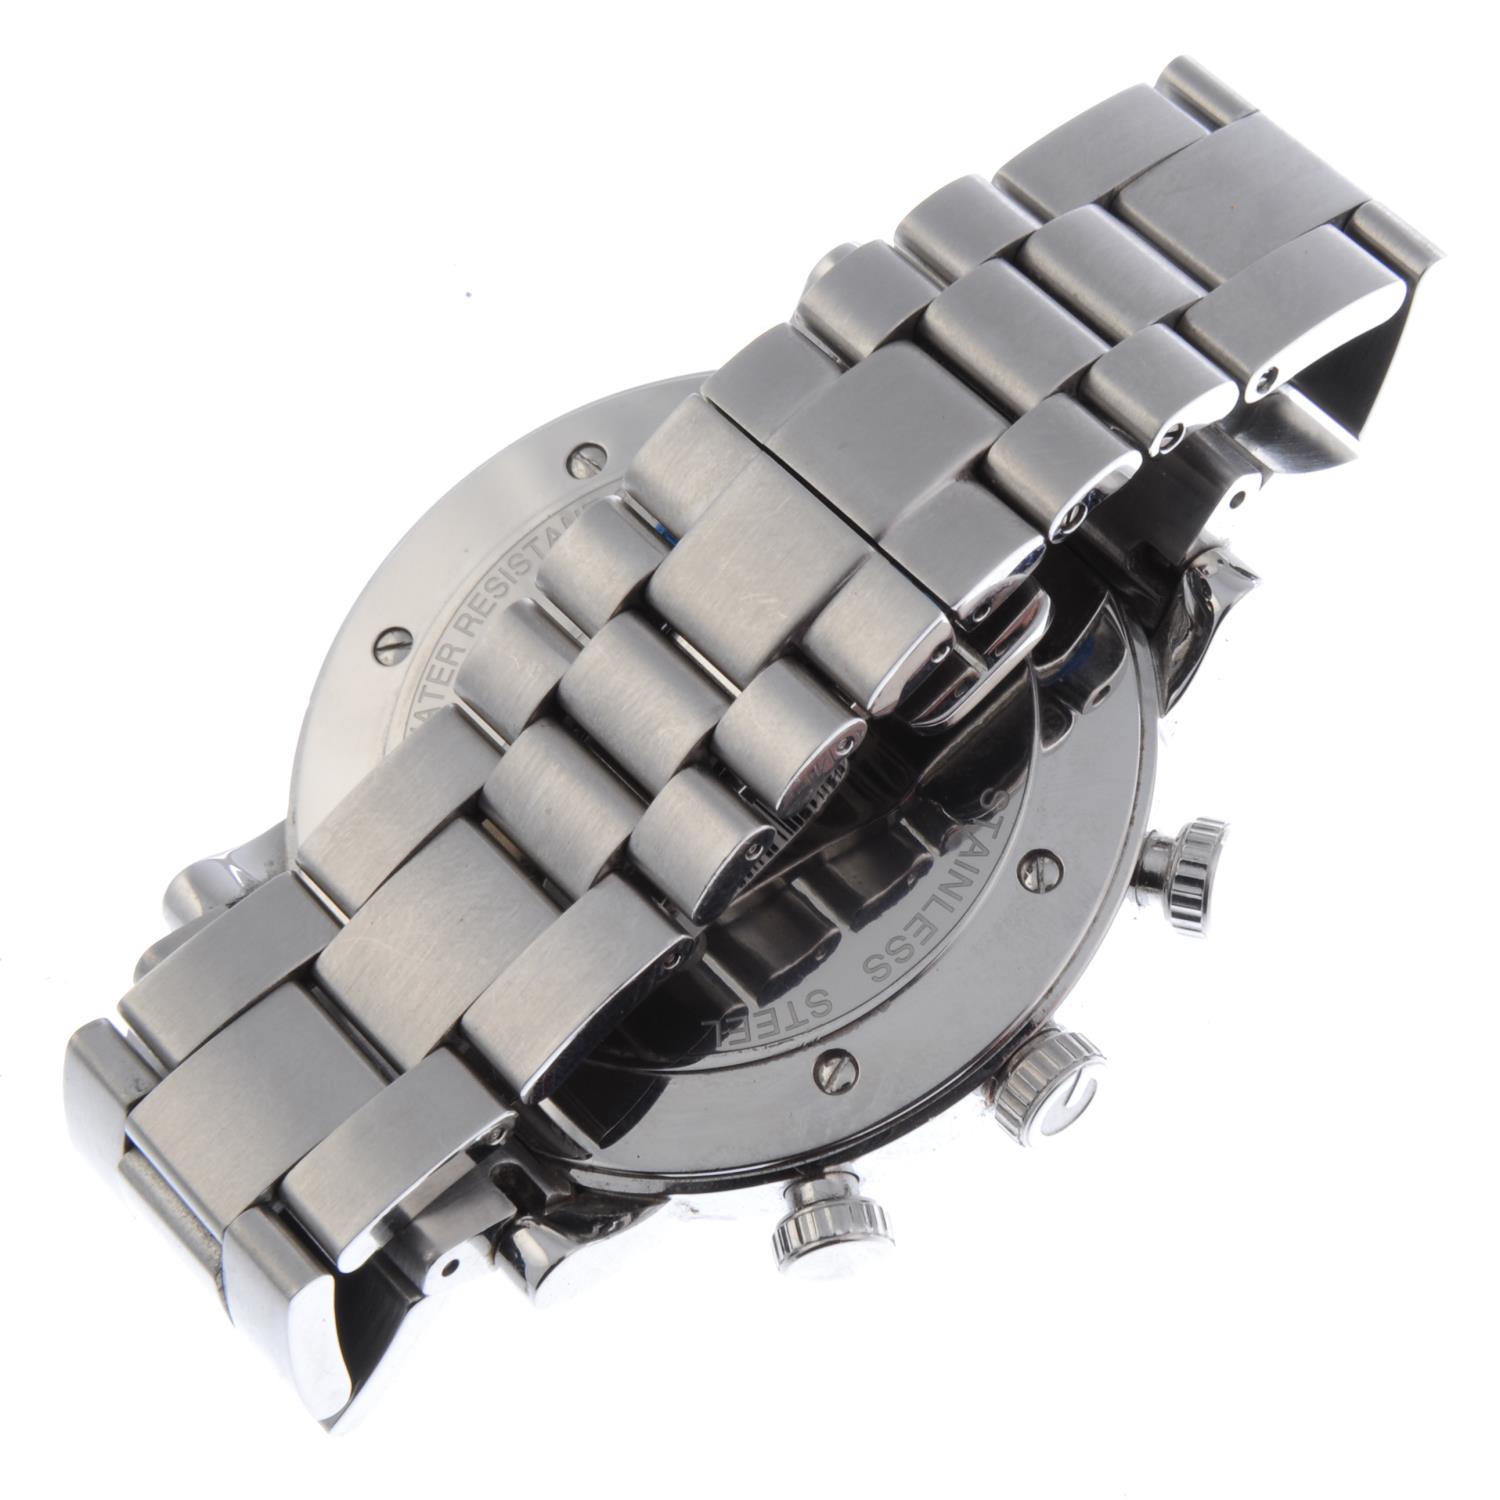 GUCCI - a gentleman's Chronoscope chronograph bracelet watch. - Image 2 of 4